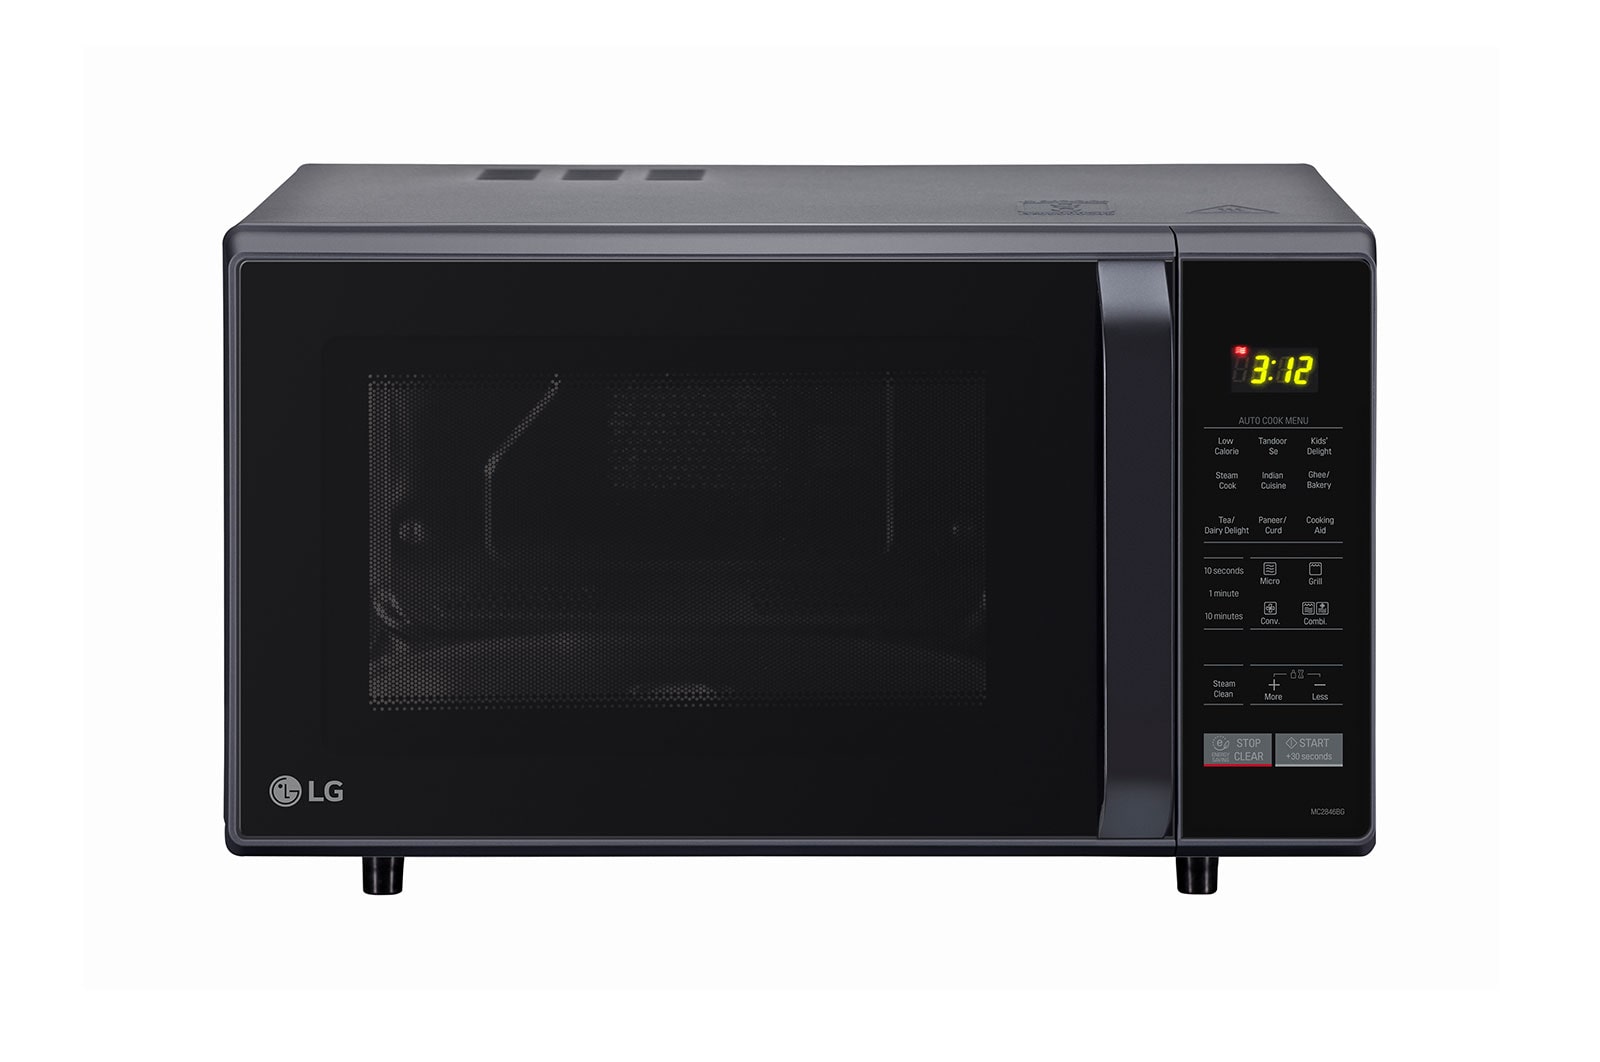 LG 28 L Convection Microwave Oven  (MC2846BG, Black), MC2846BG